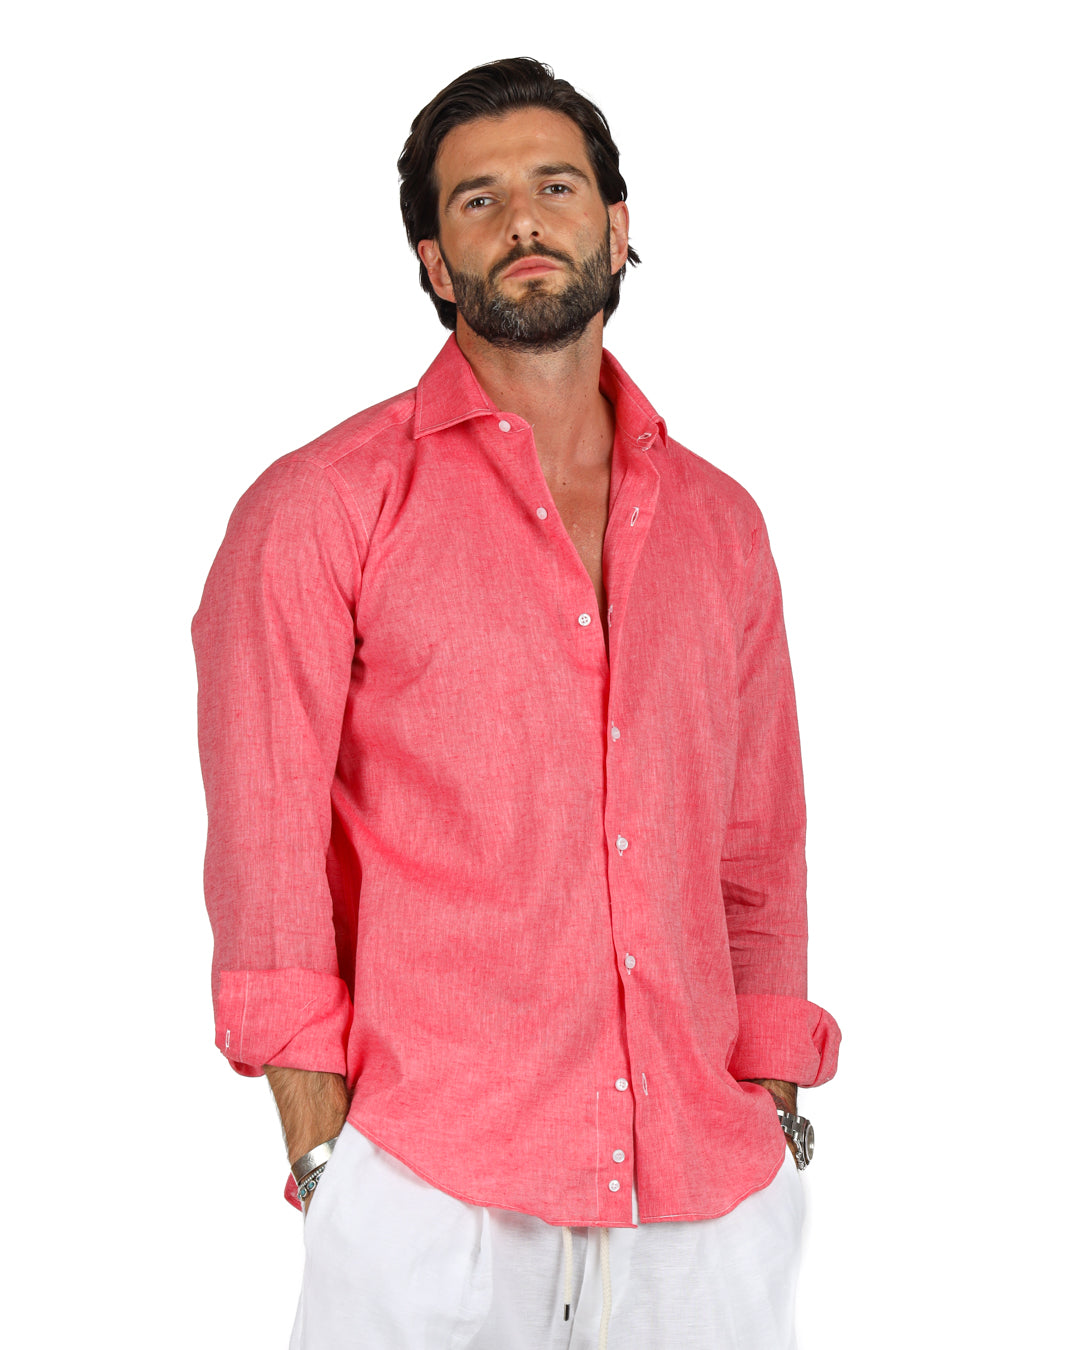 Praiano - Classic coral linen shirt